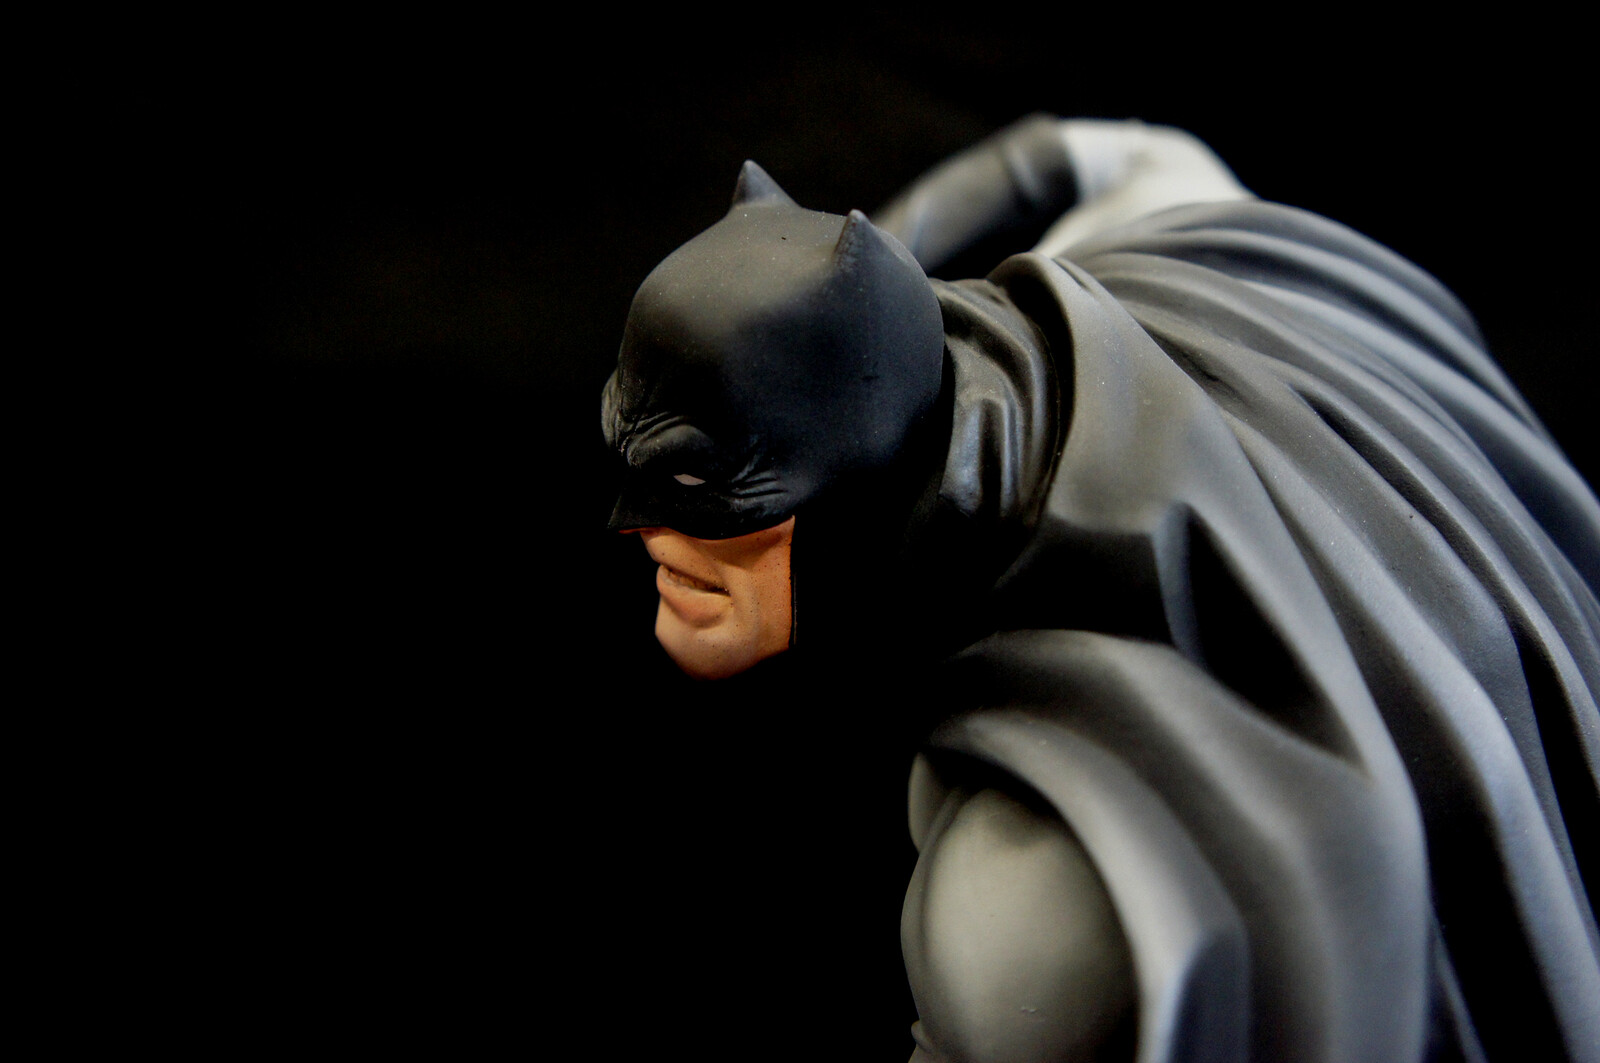 Frank Miller Dark Knight Batman vs Joker Diorama Art Statue 